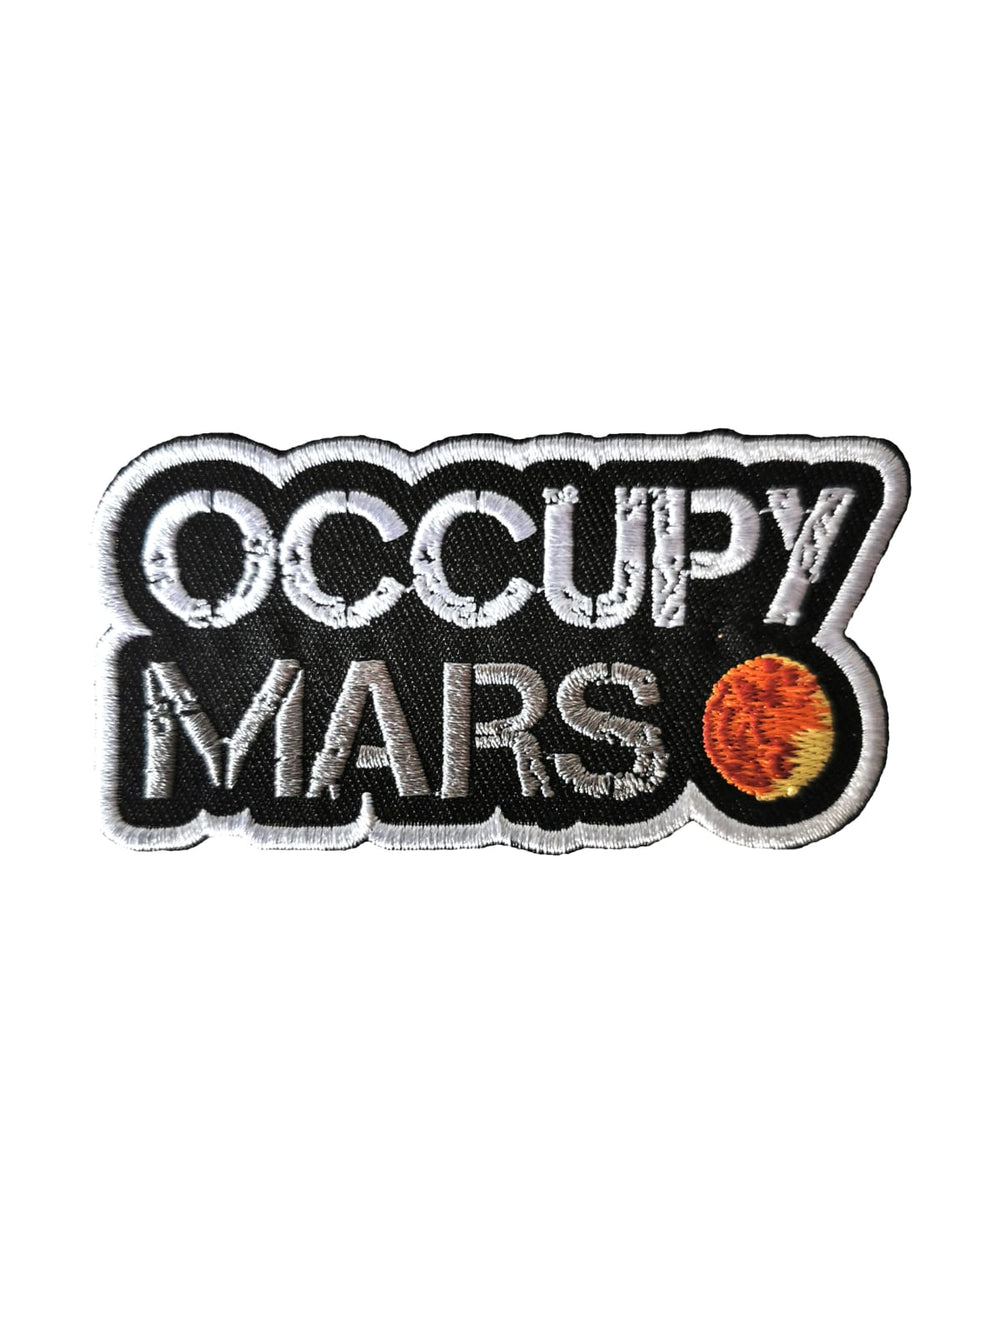 Occupy Mars Heat Sensitive Terraforming Mug – SpaceX Store